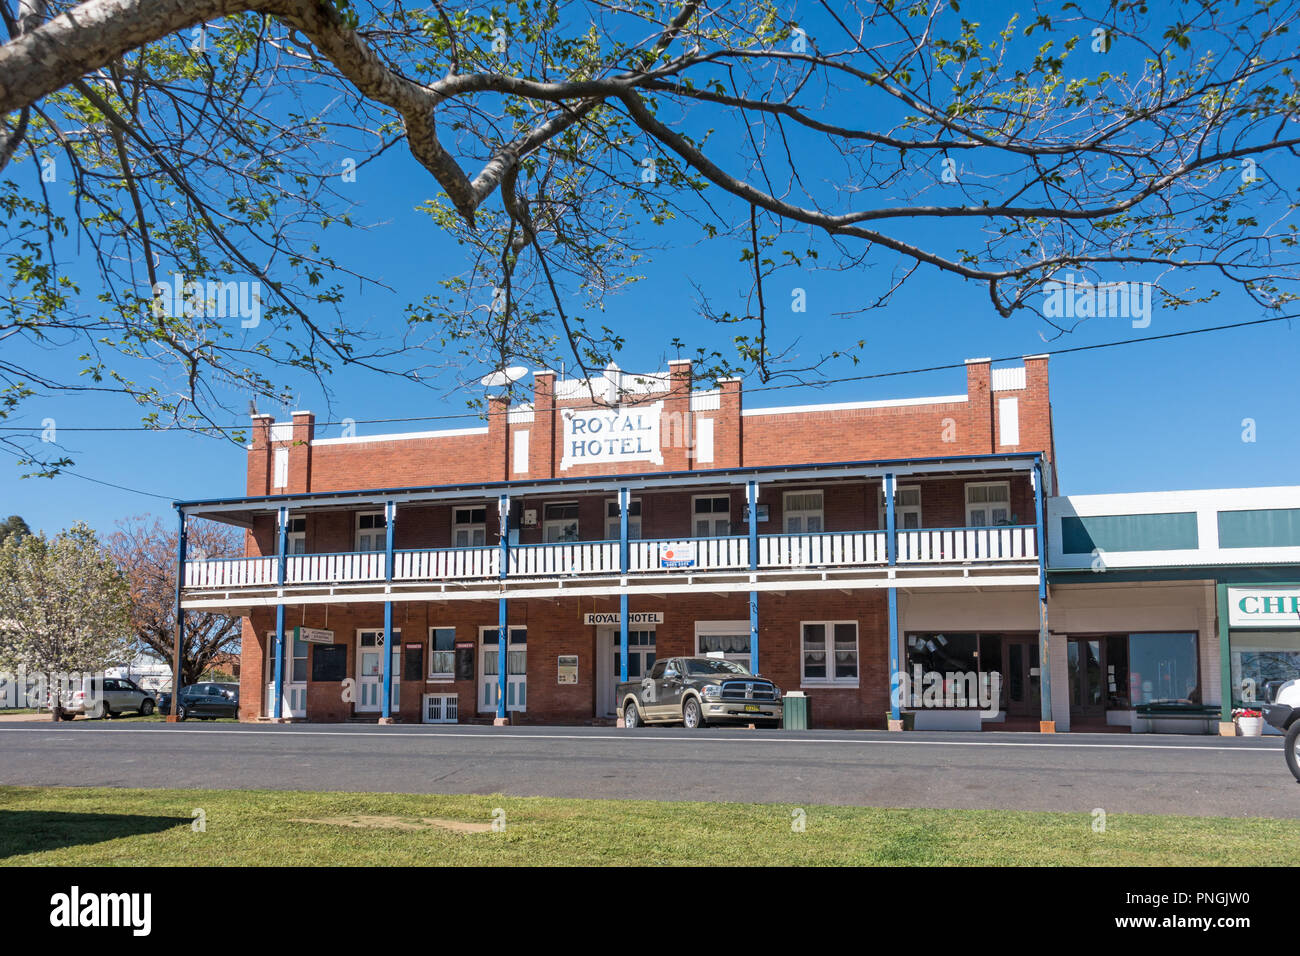 Royal Hotel,Dunedoo, NSW Australie. Banque D'Images